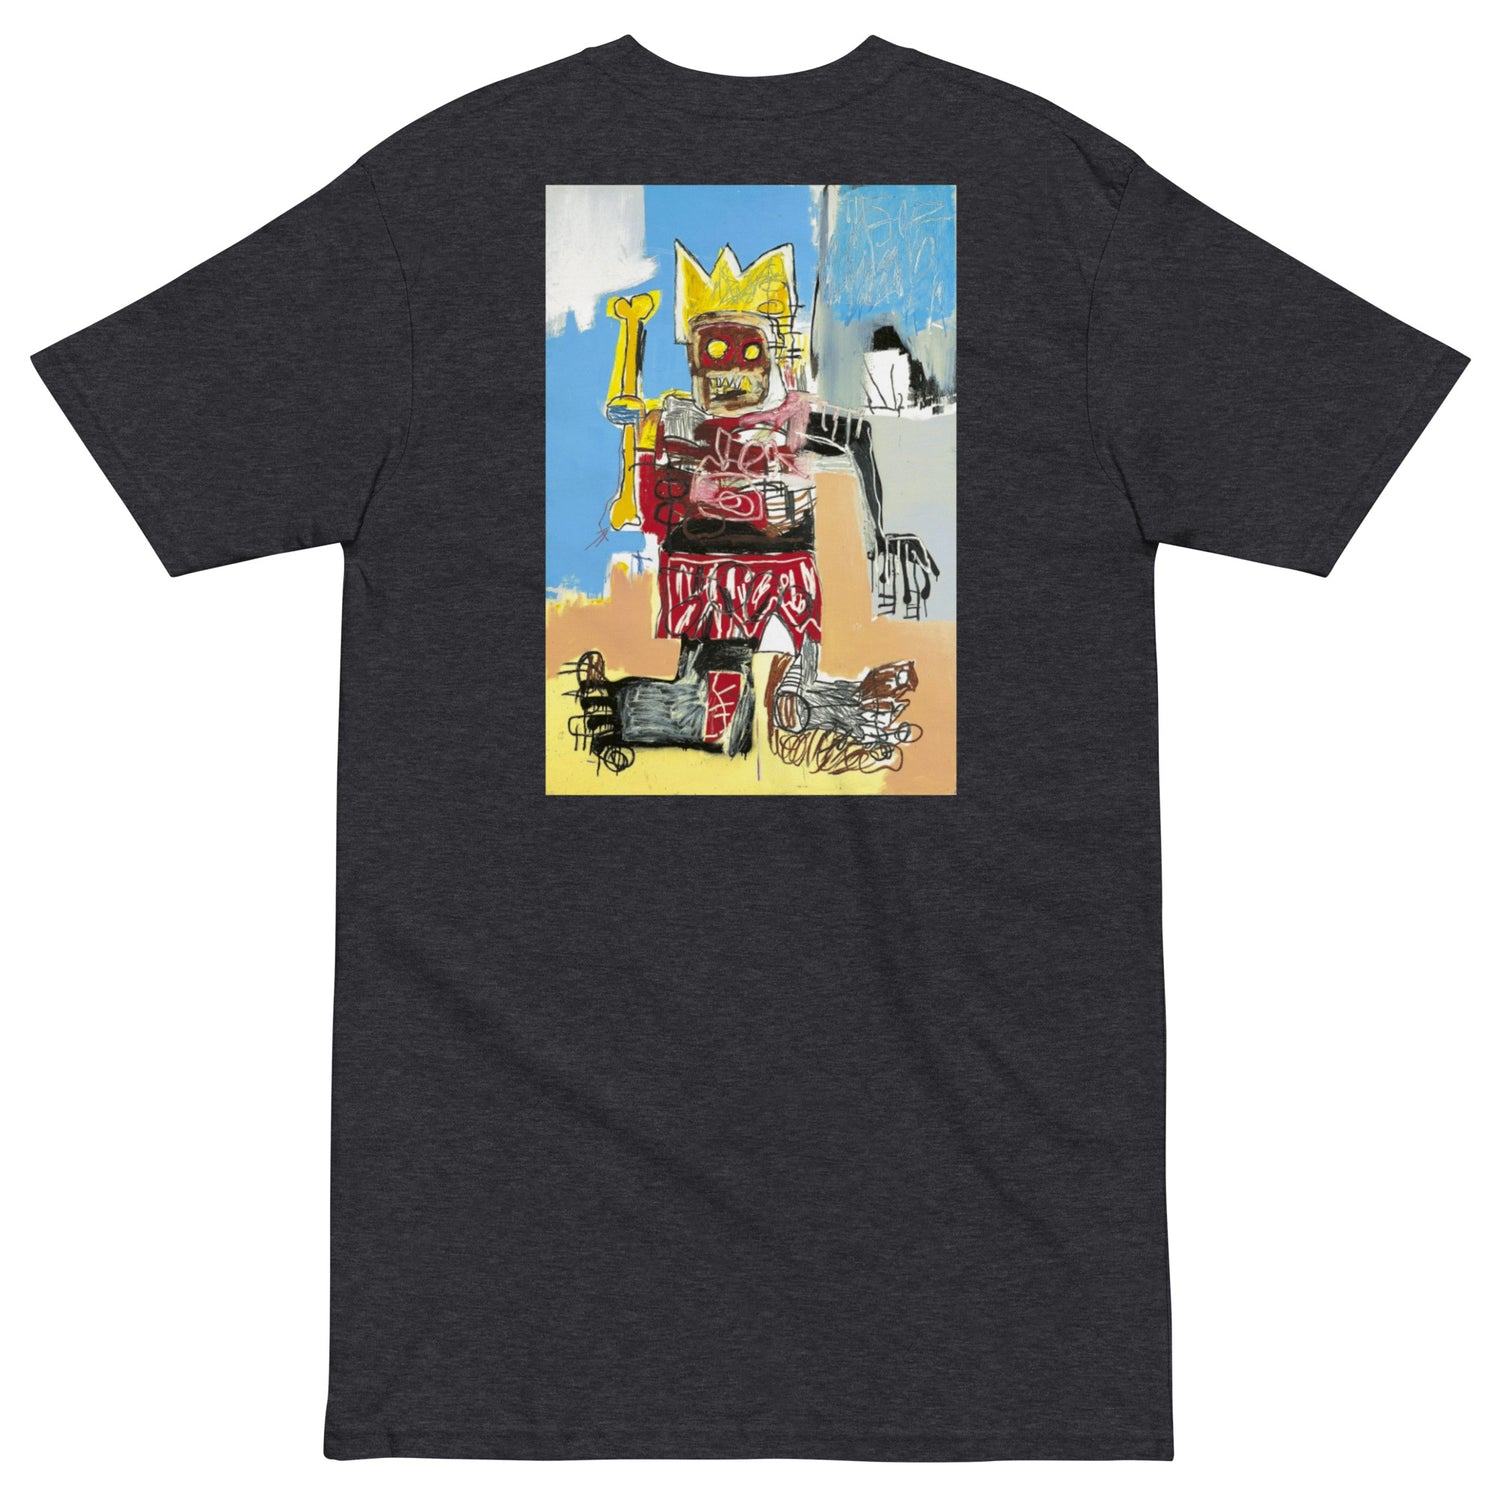 Jean-Michel Basquiat "Untitled" 1982 Artwork Embroidered + Printed Premium Streetwear T-shirt Charcoal Grey